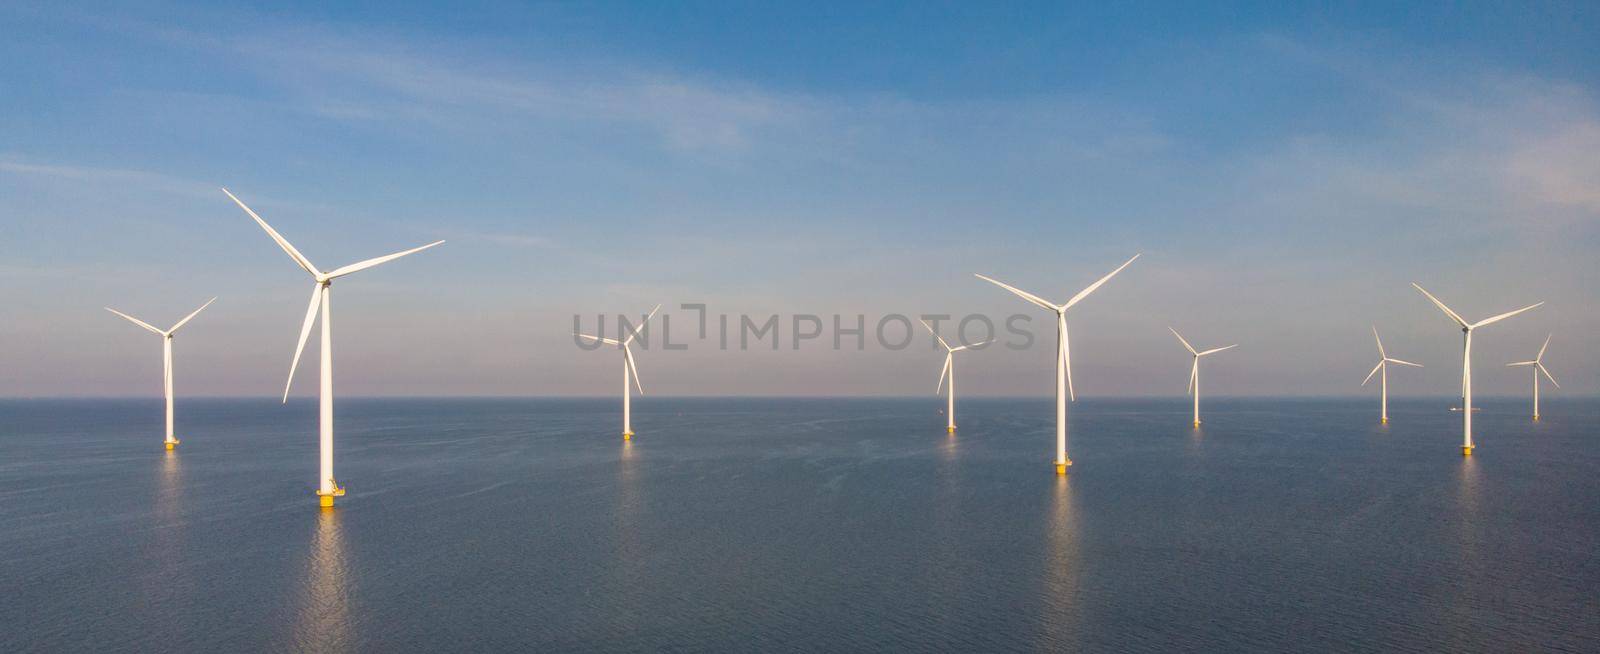 Huge windmill turbines, Offshore Windmill farm in the ocean Westermeerwind park , windmills isolated at sea on a beautiful bright day Netherlands Flevoland Noordoostpolder by fokkebok